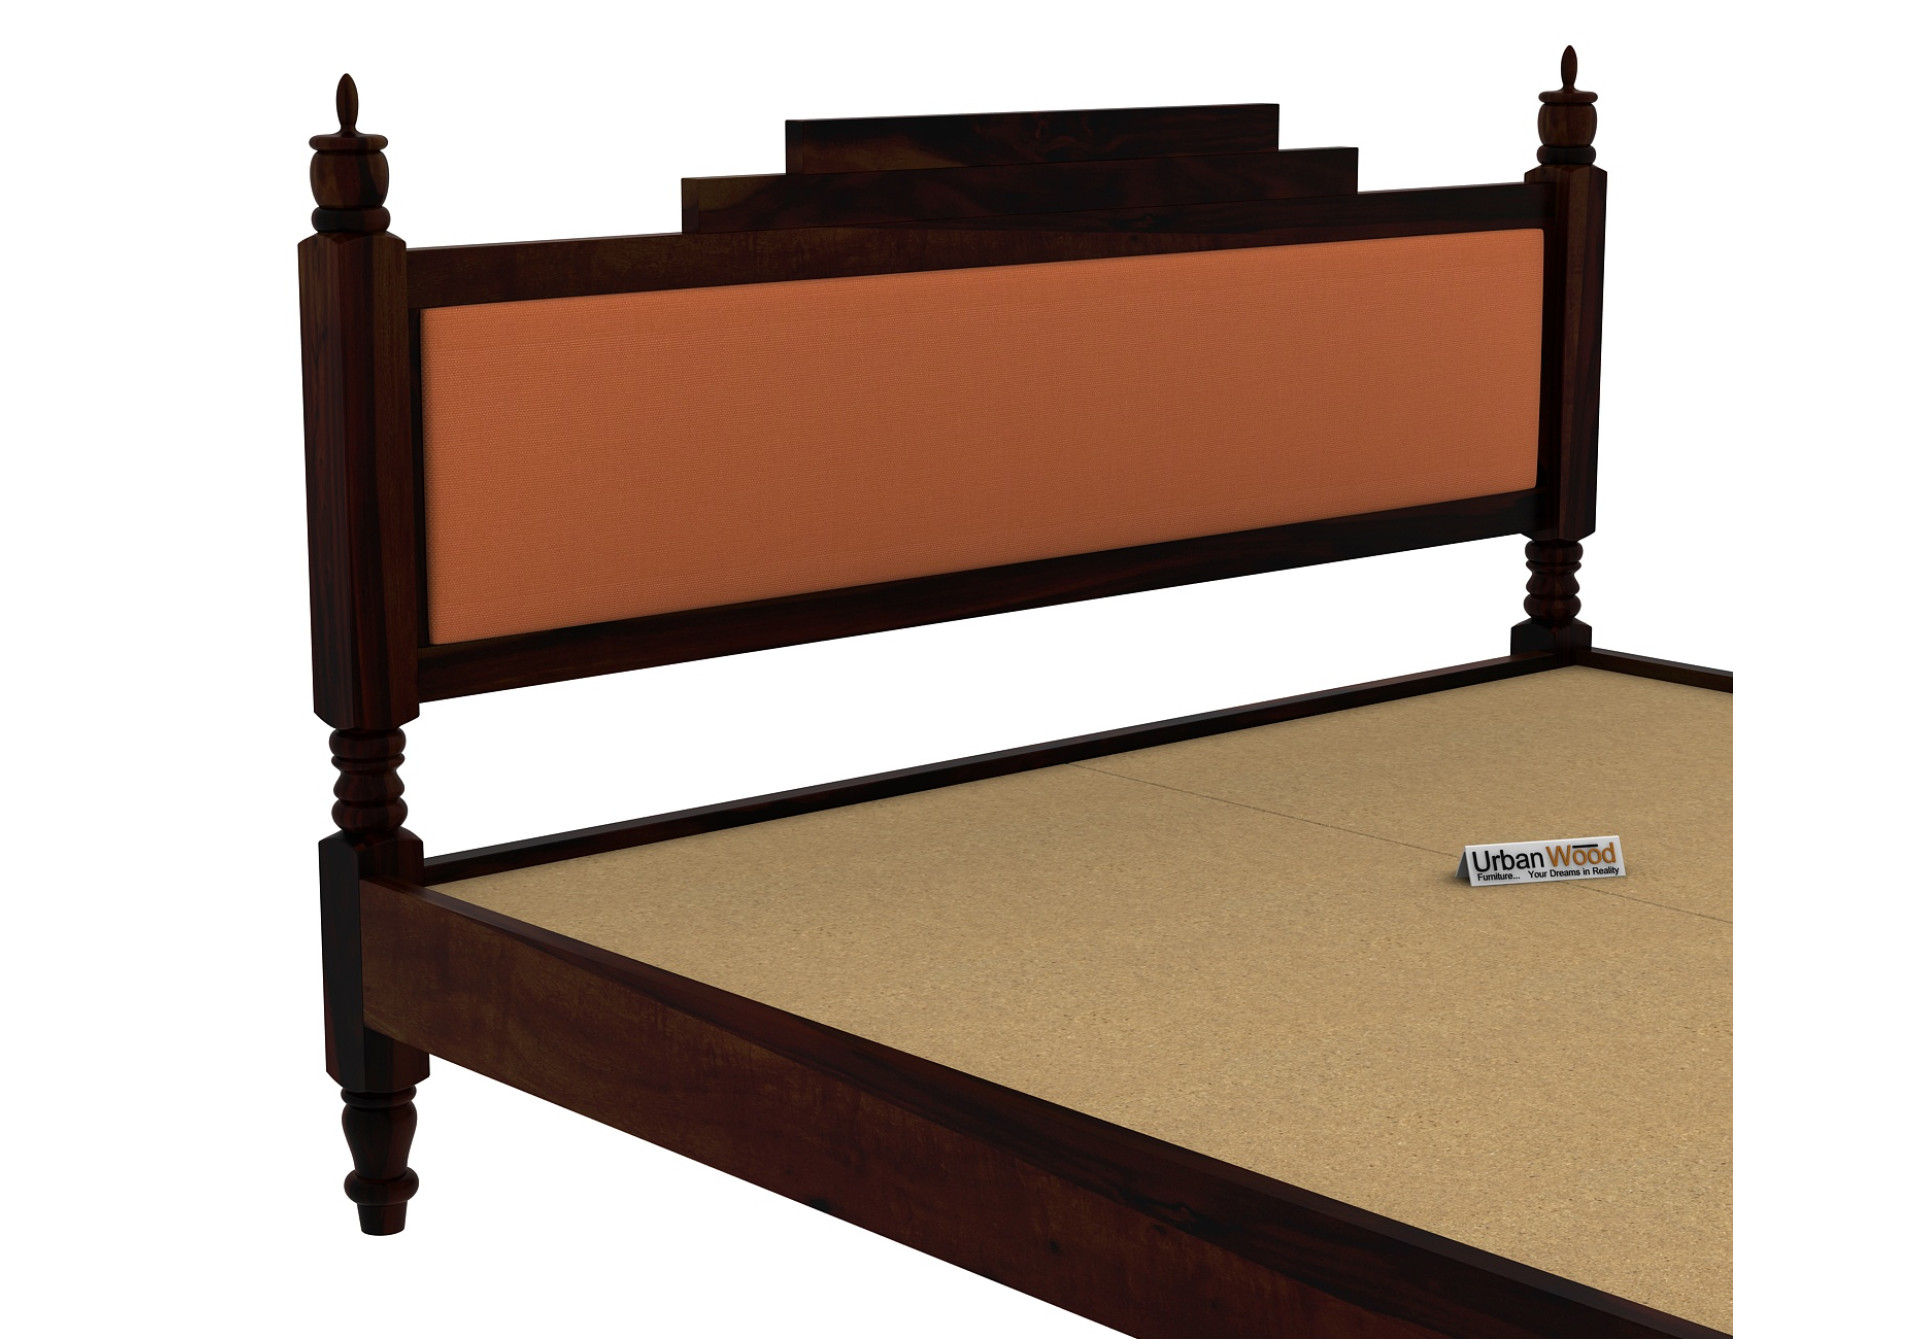 Jodhpuri Without Storage Bed (Queen Size, Walnut Finish)